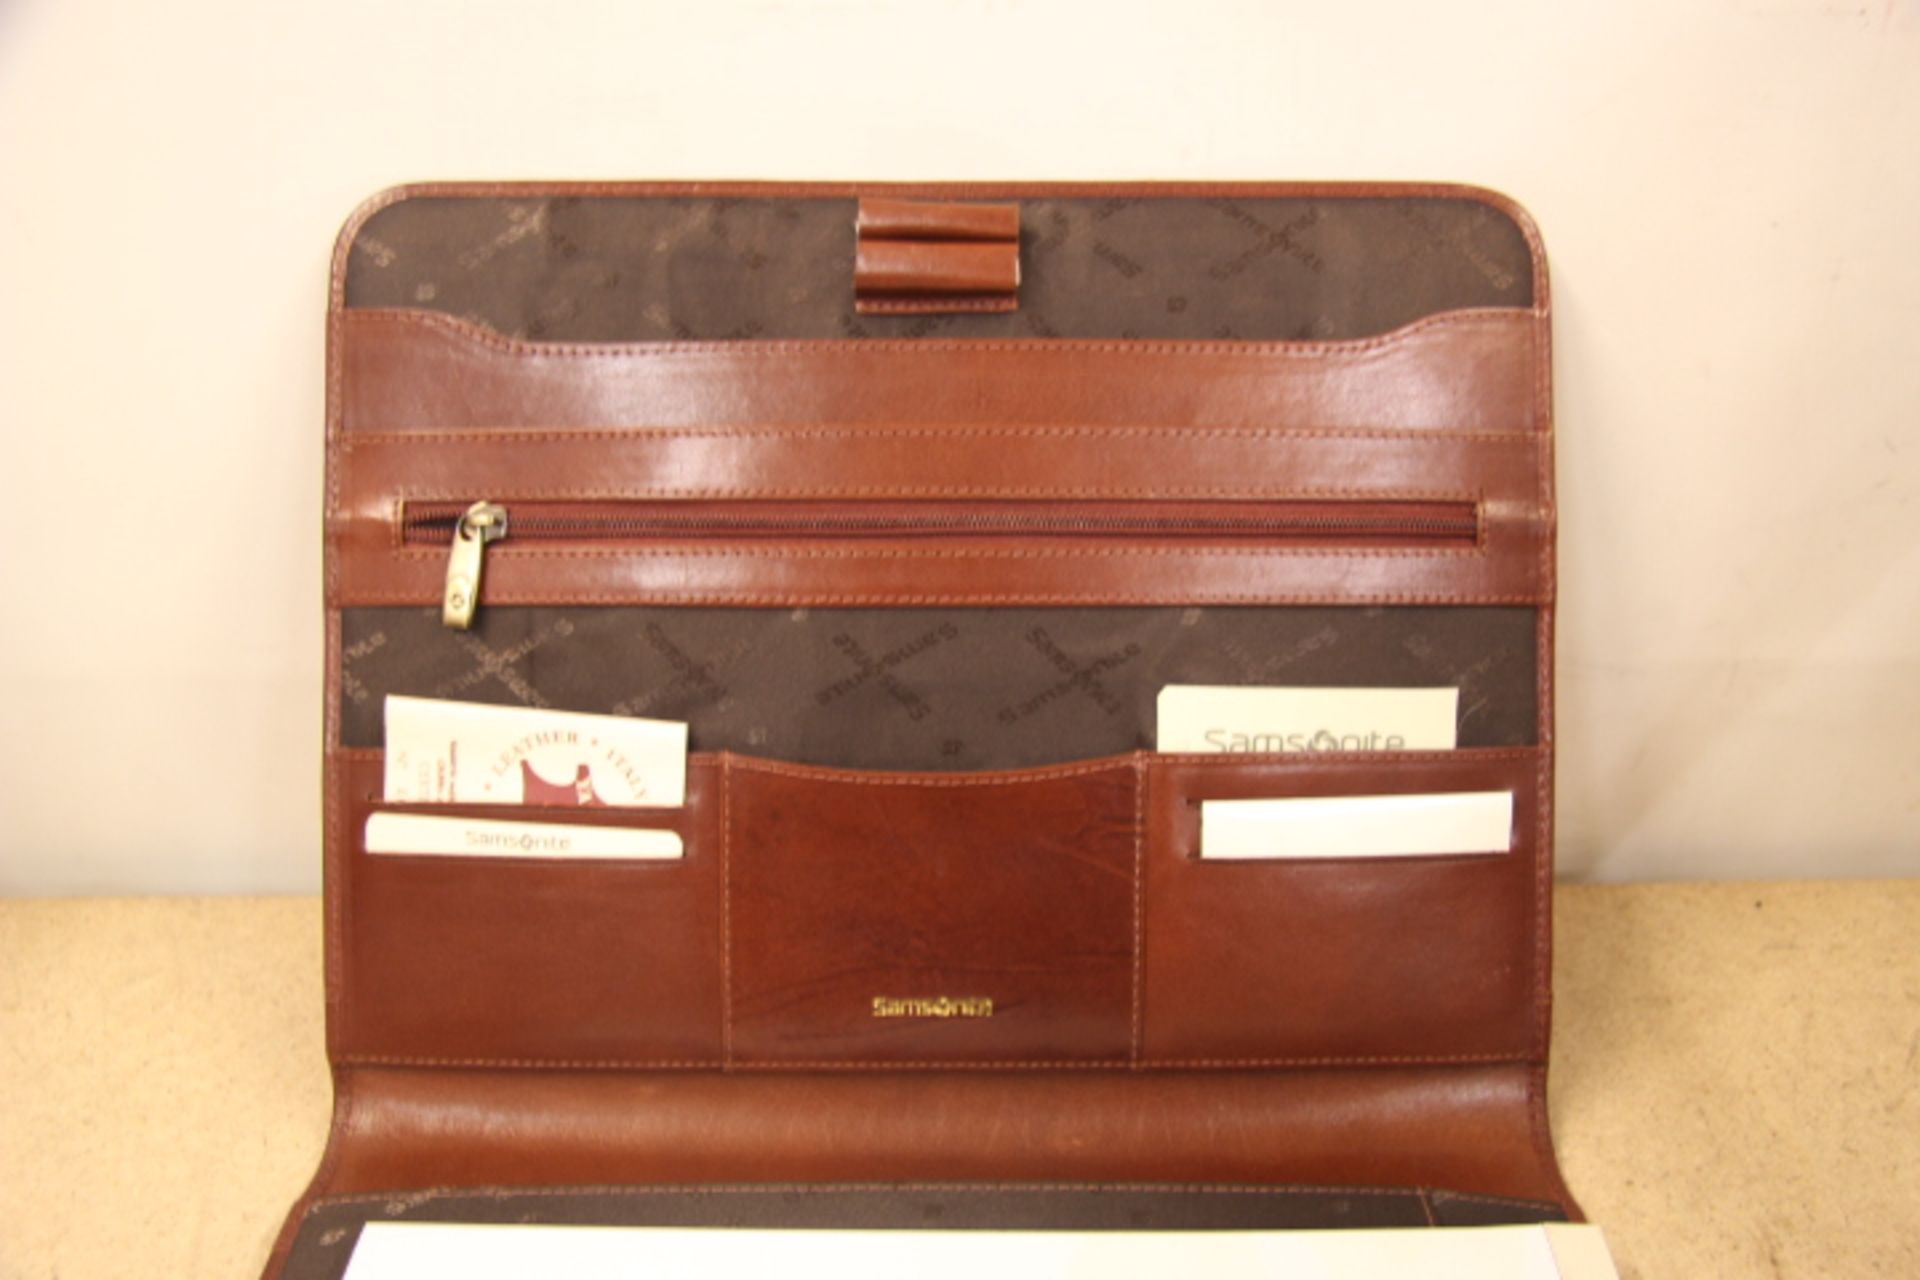 V Brand New Samsonite Gognac Leather Executive Folder With Writing Pad Card Holders Zipped Pocket - Image 3 of 3